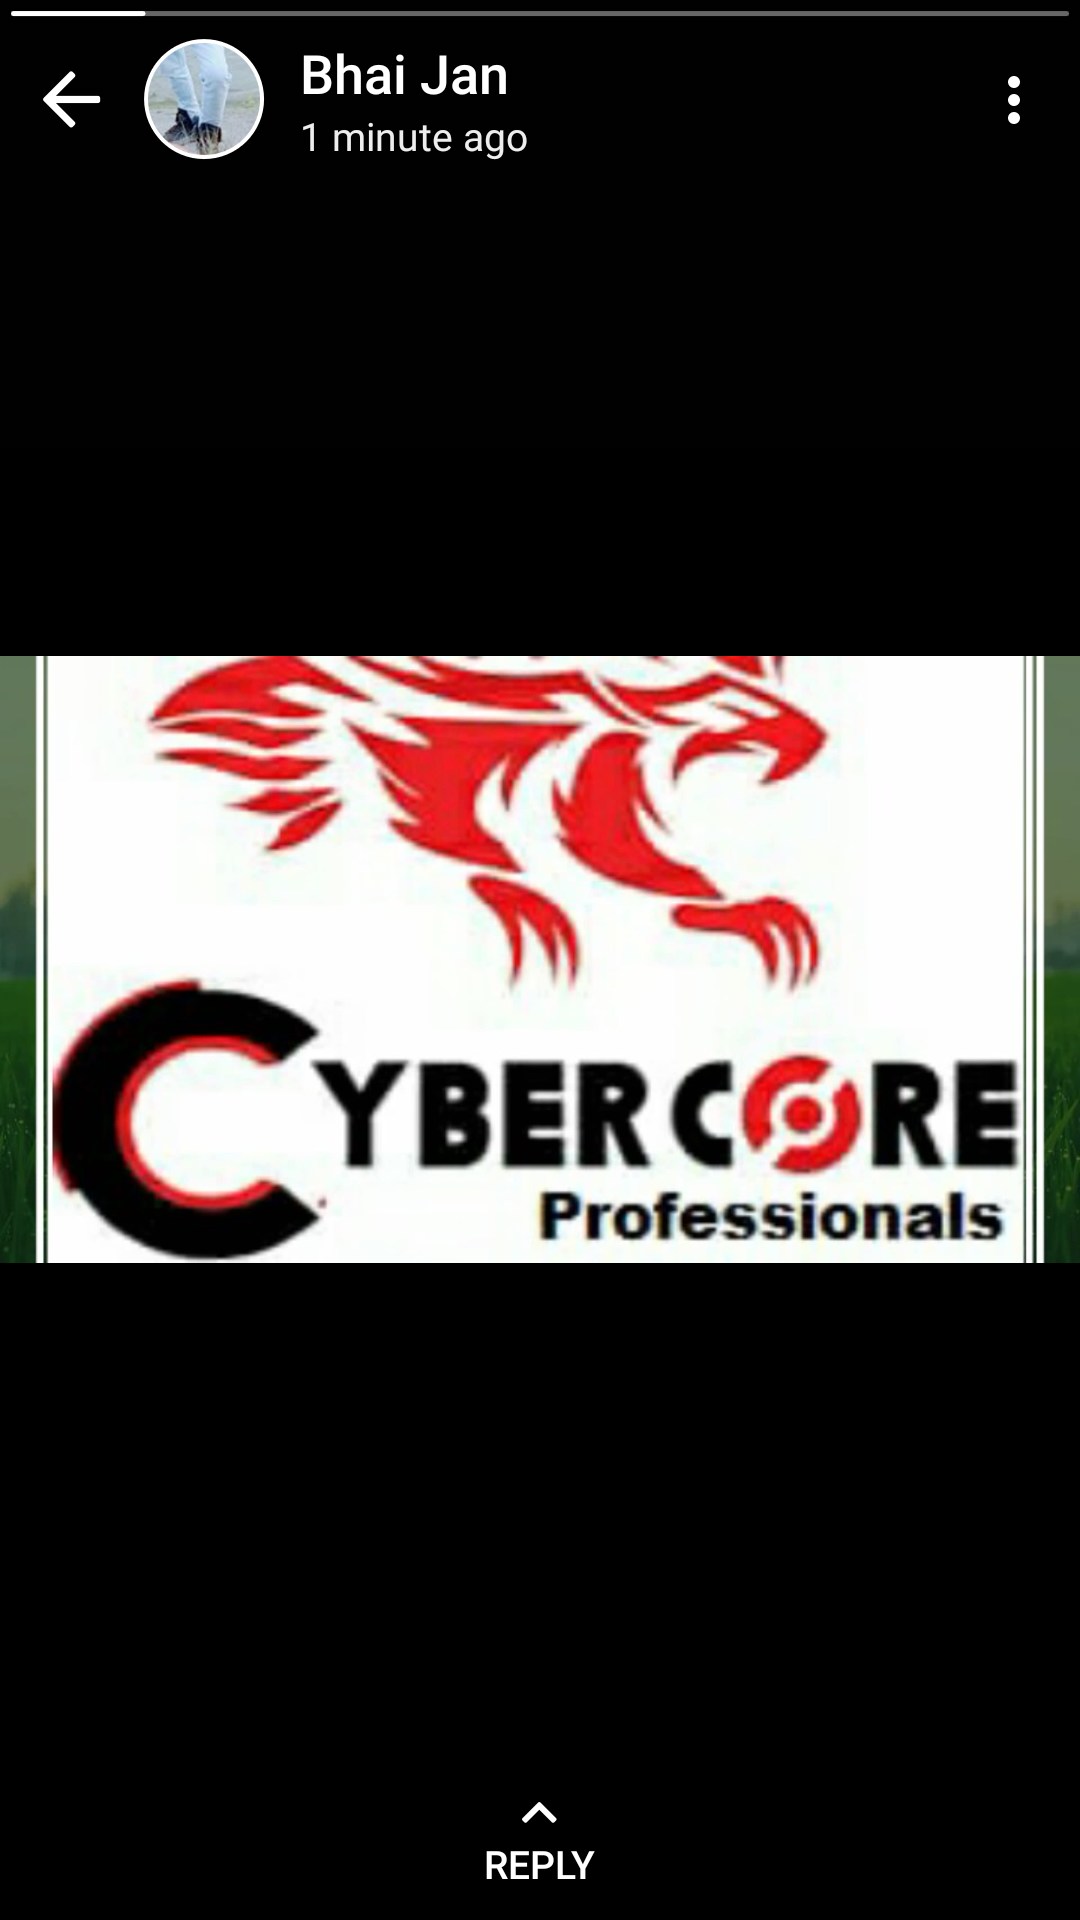 Cyber Core Professionals